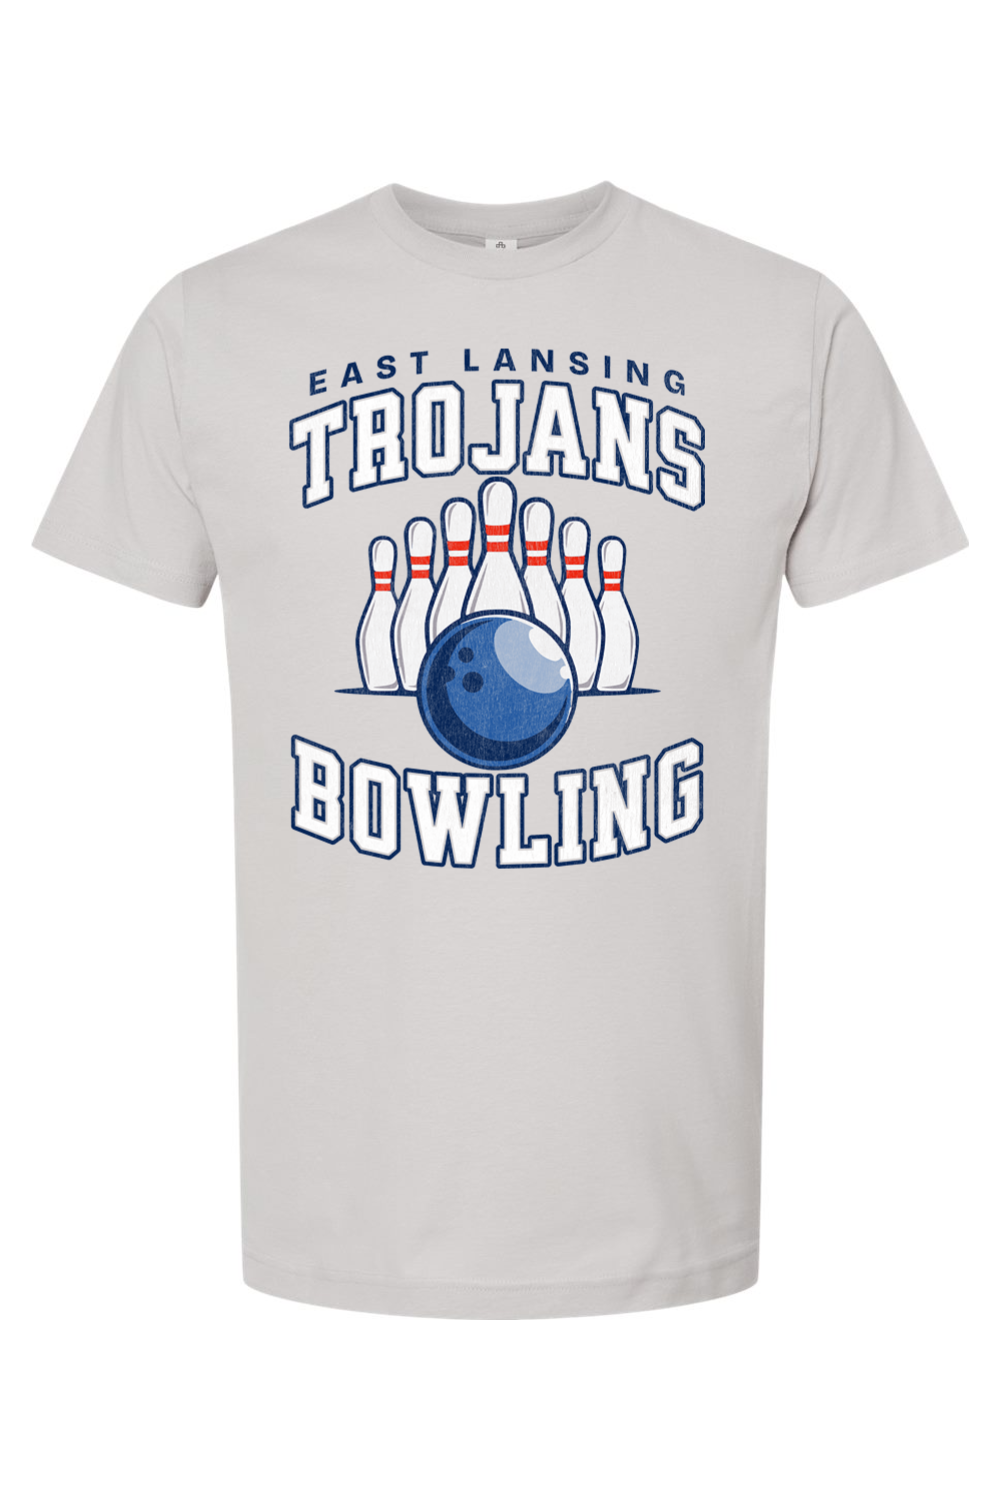 East Lansing Bowling Collegiate - Yinzylvania